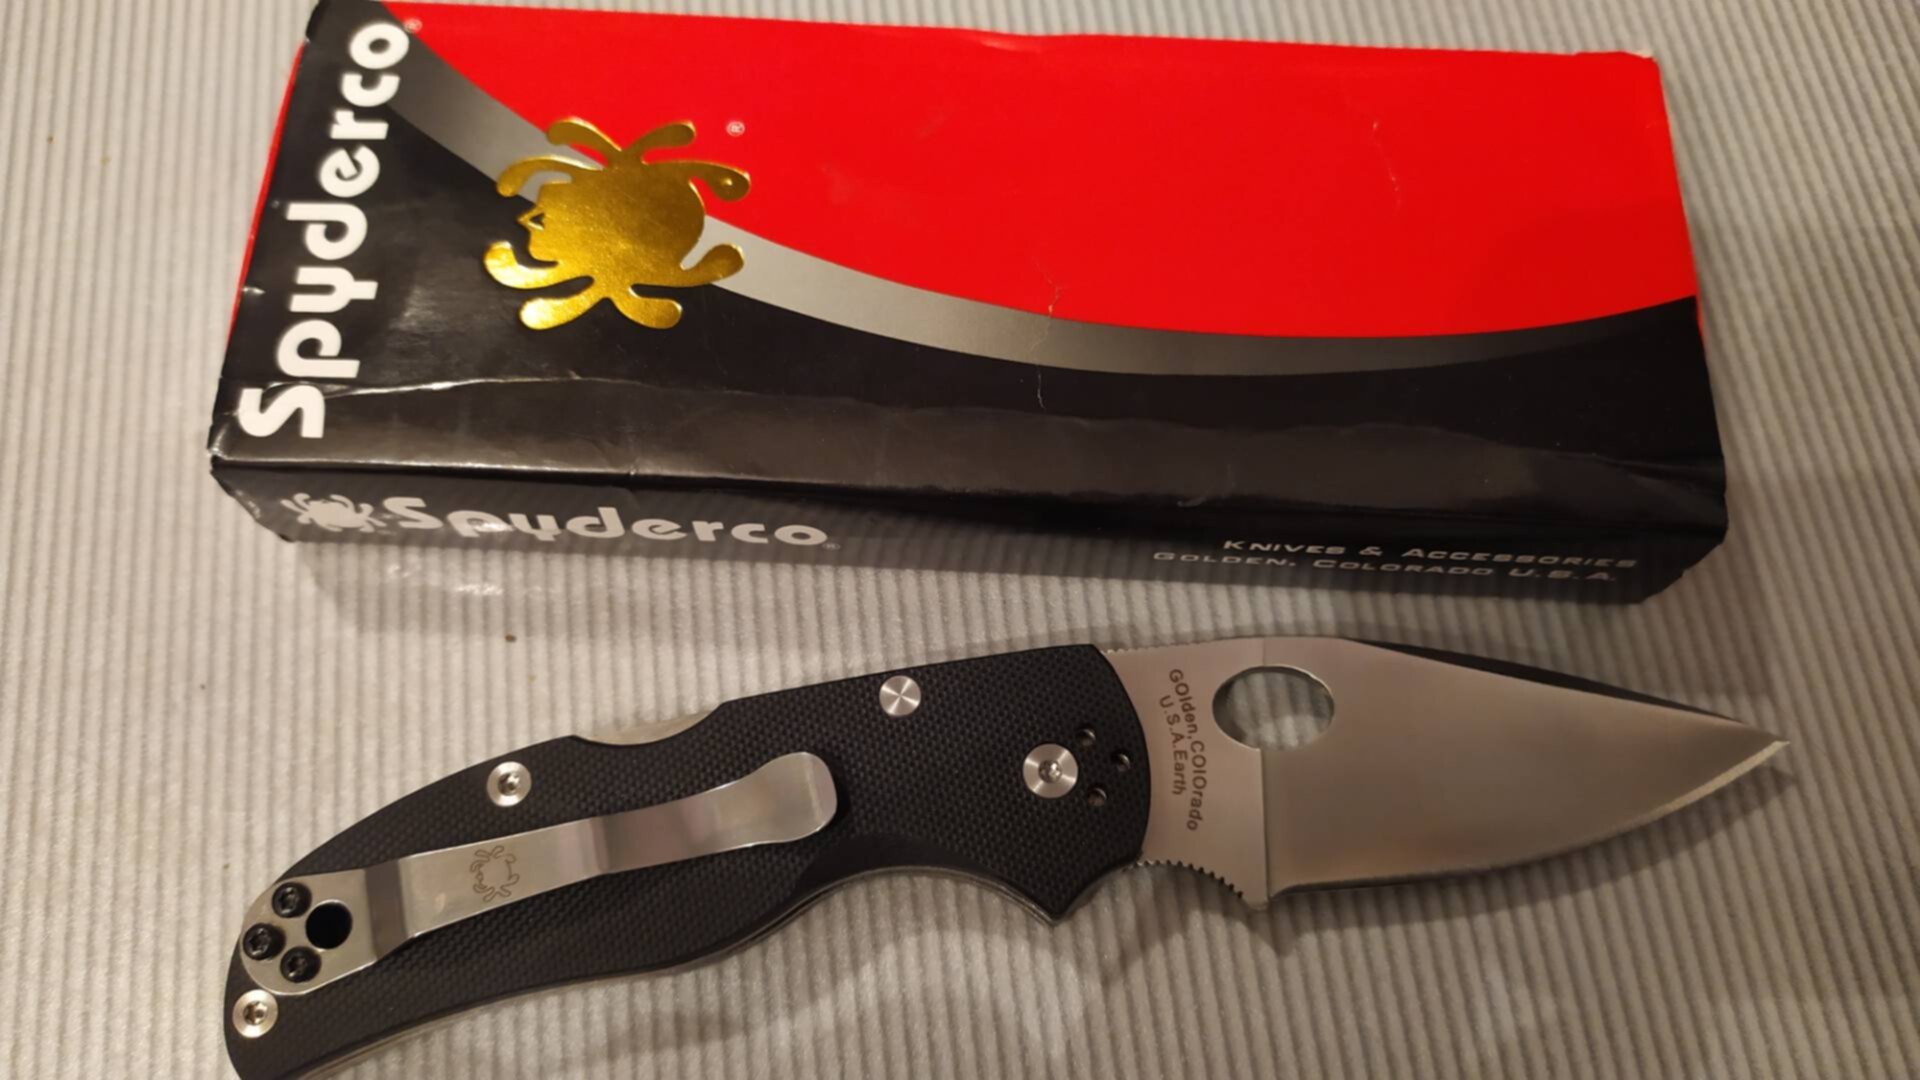 Реплики ножей спайдерко. Китайский нож копия Buck. Spyderco native с рисунком на клинке. Native нож.